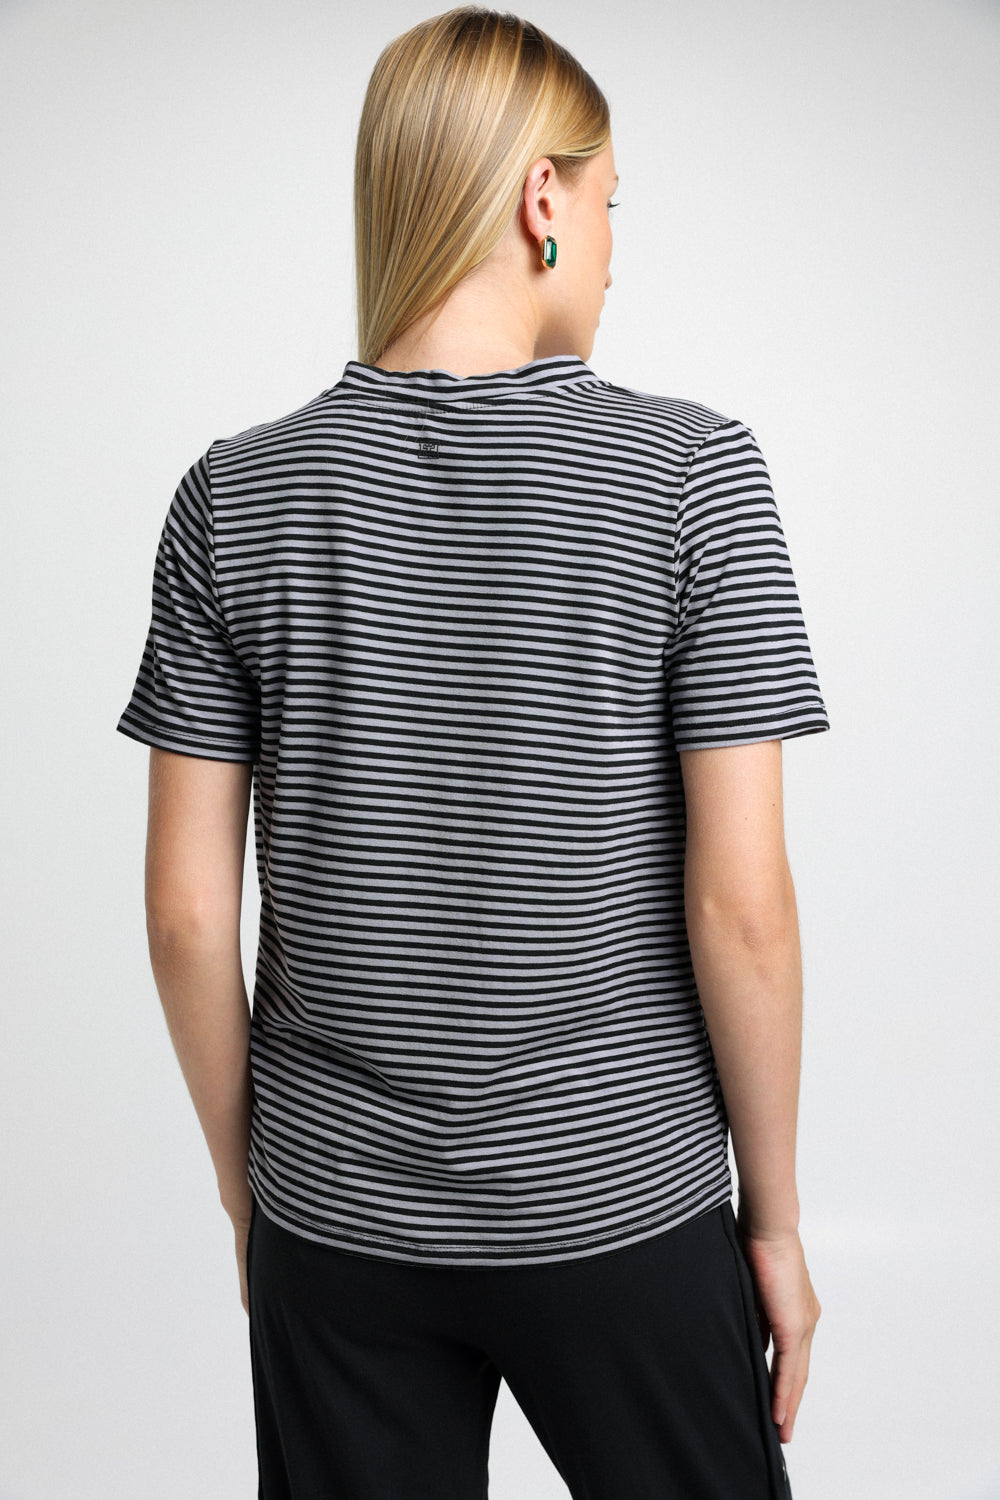 Vole Black & Grey Stripes T-shirt